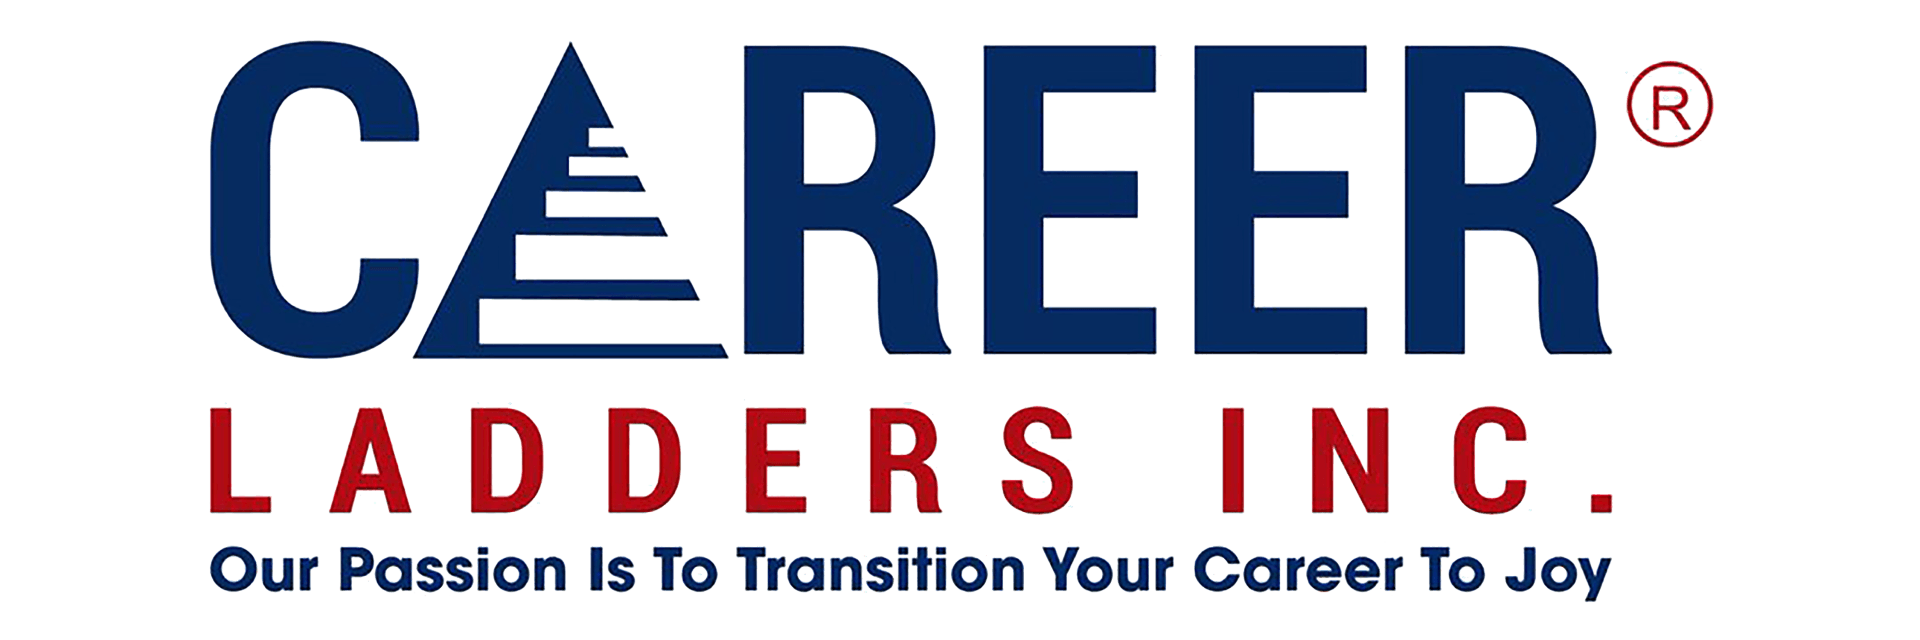 Career Ladders Inc. logo